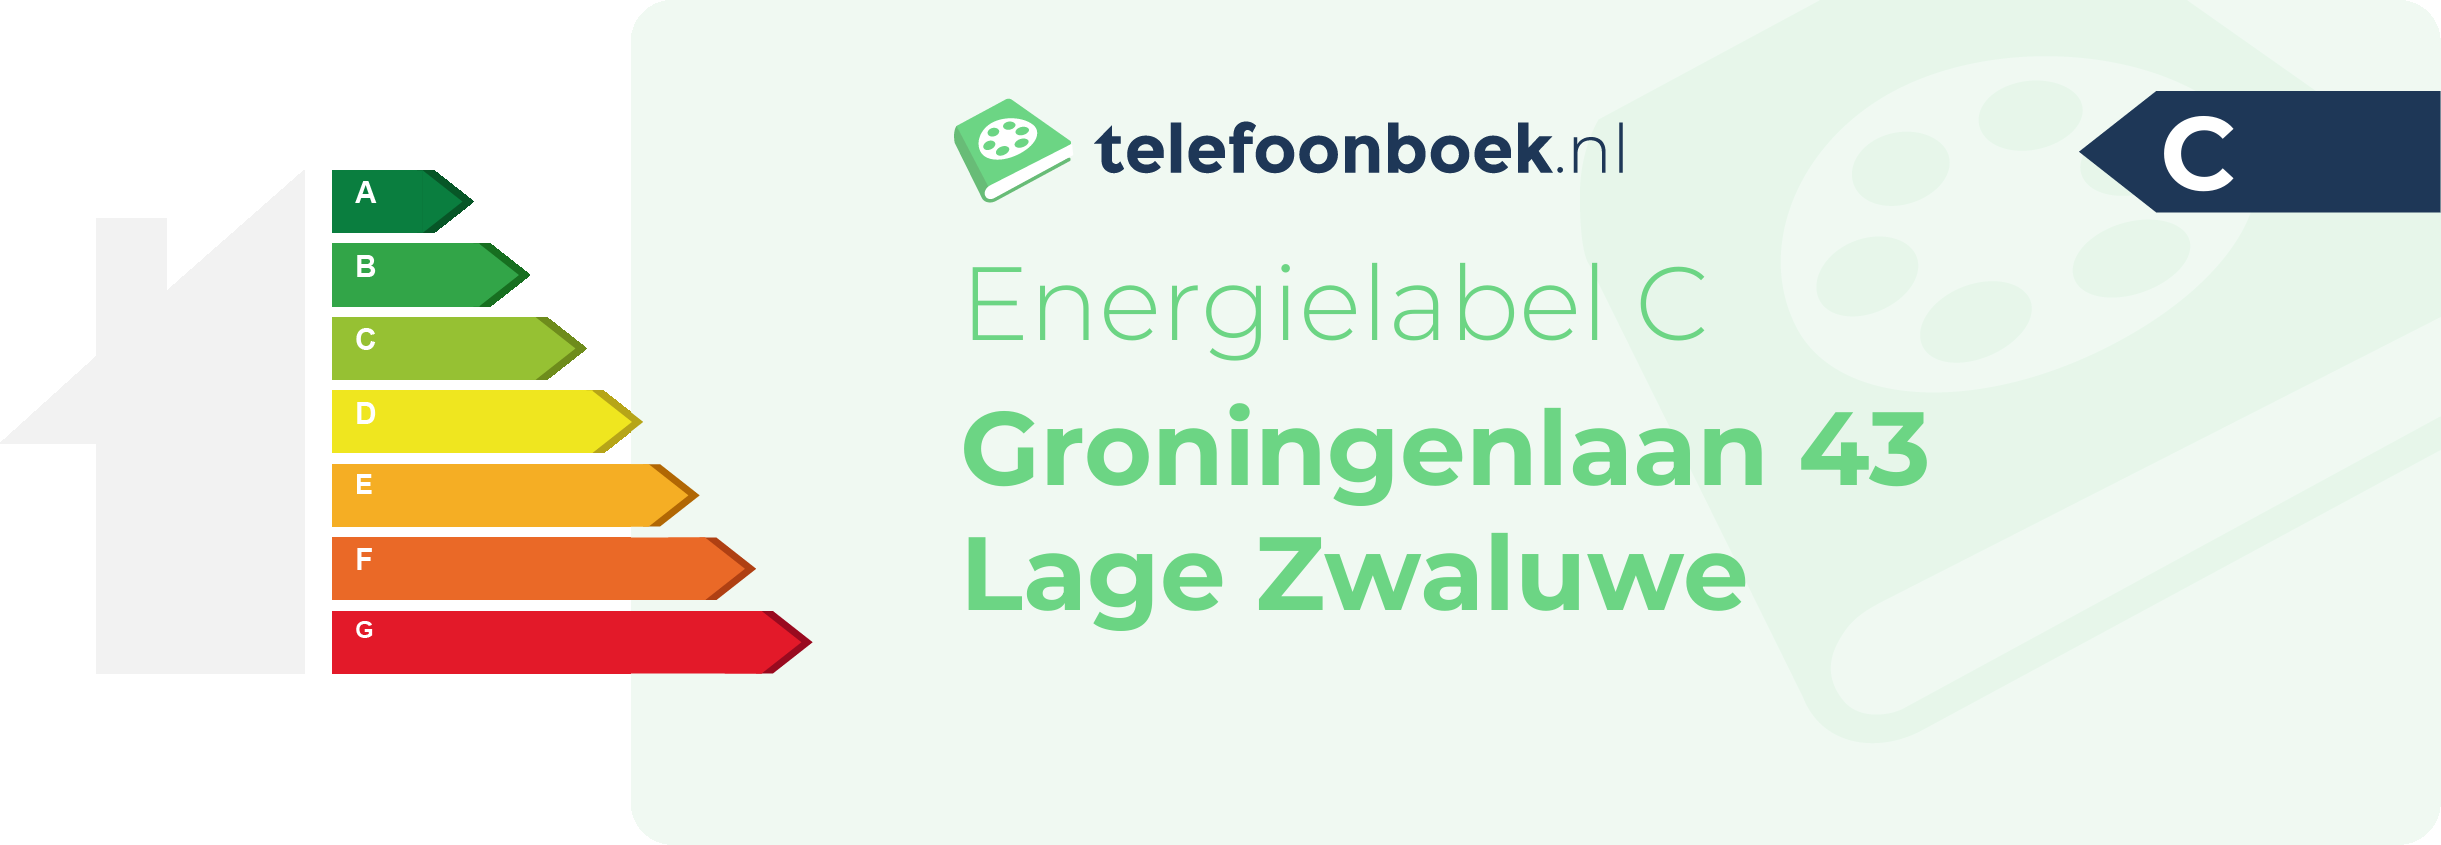 Energielabel Groningenlaan 43 Lage Zwaluwe